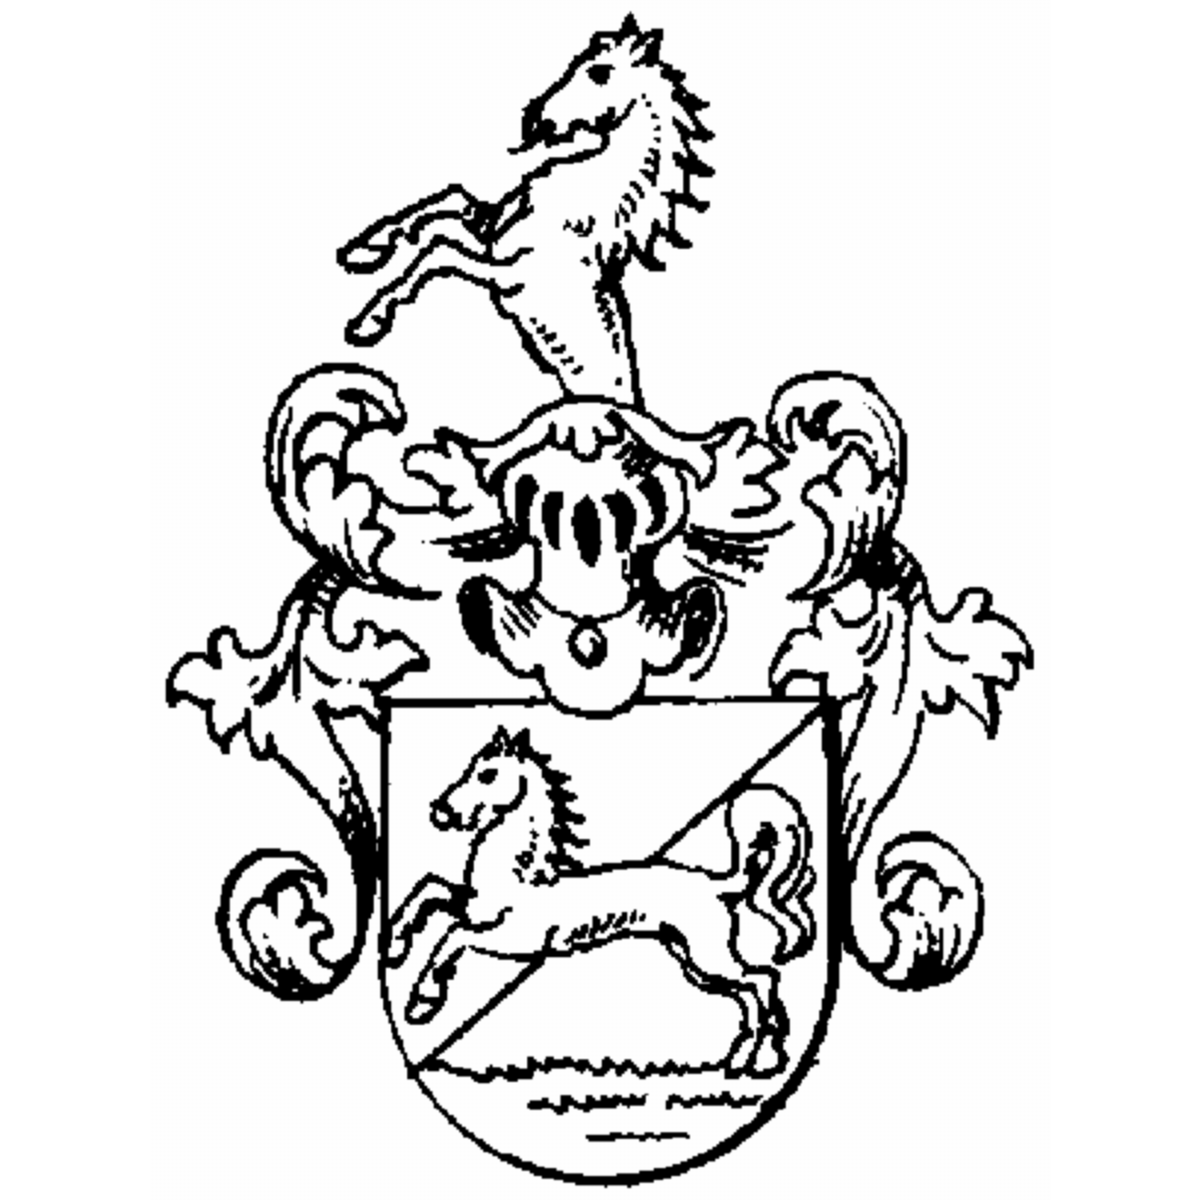 Wappen der Familie Colloredo-Mannsfeld